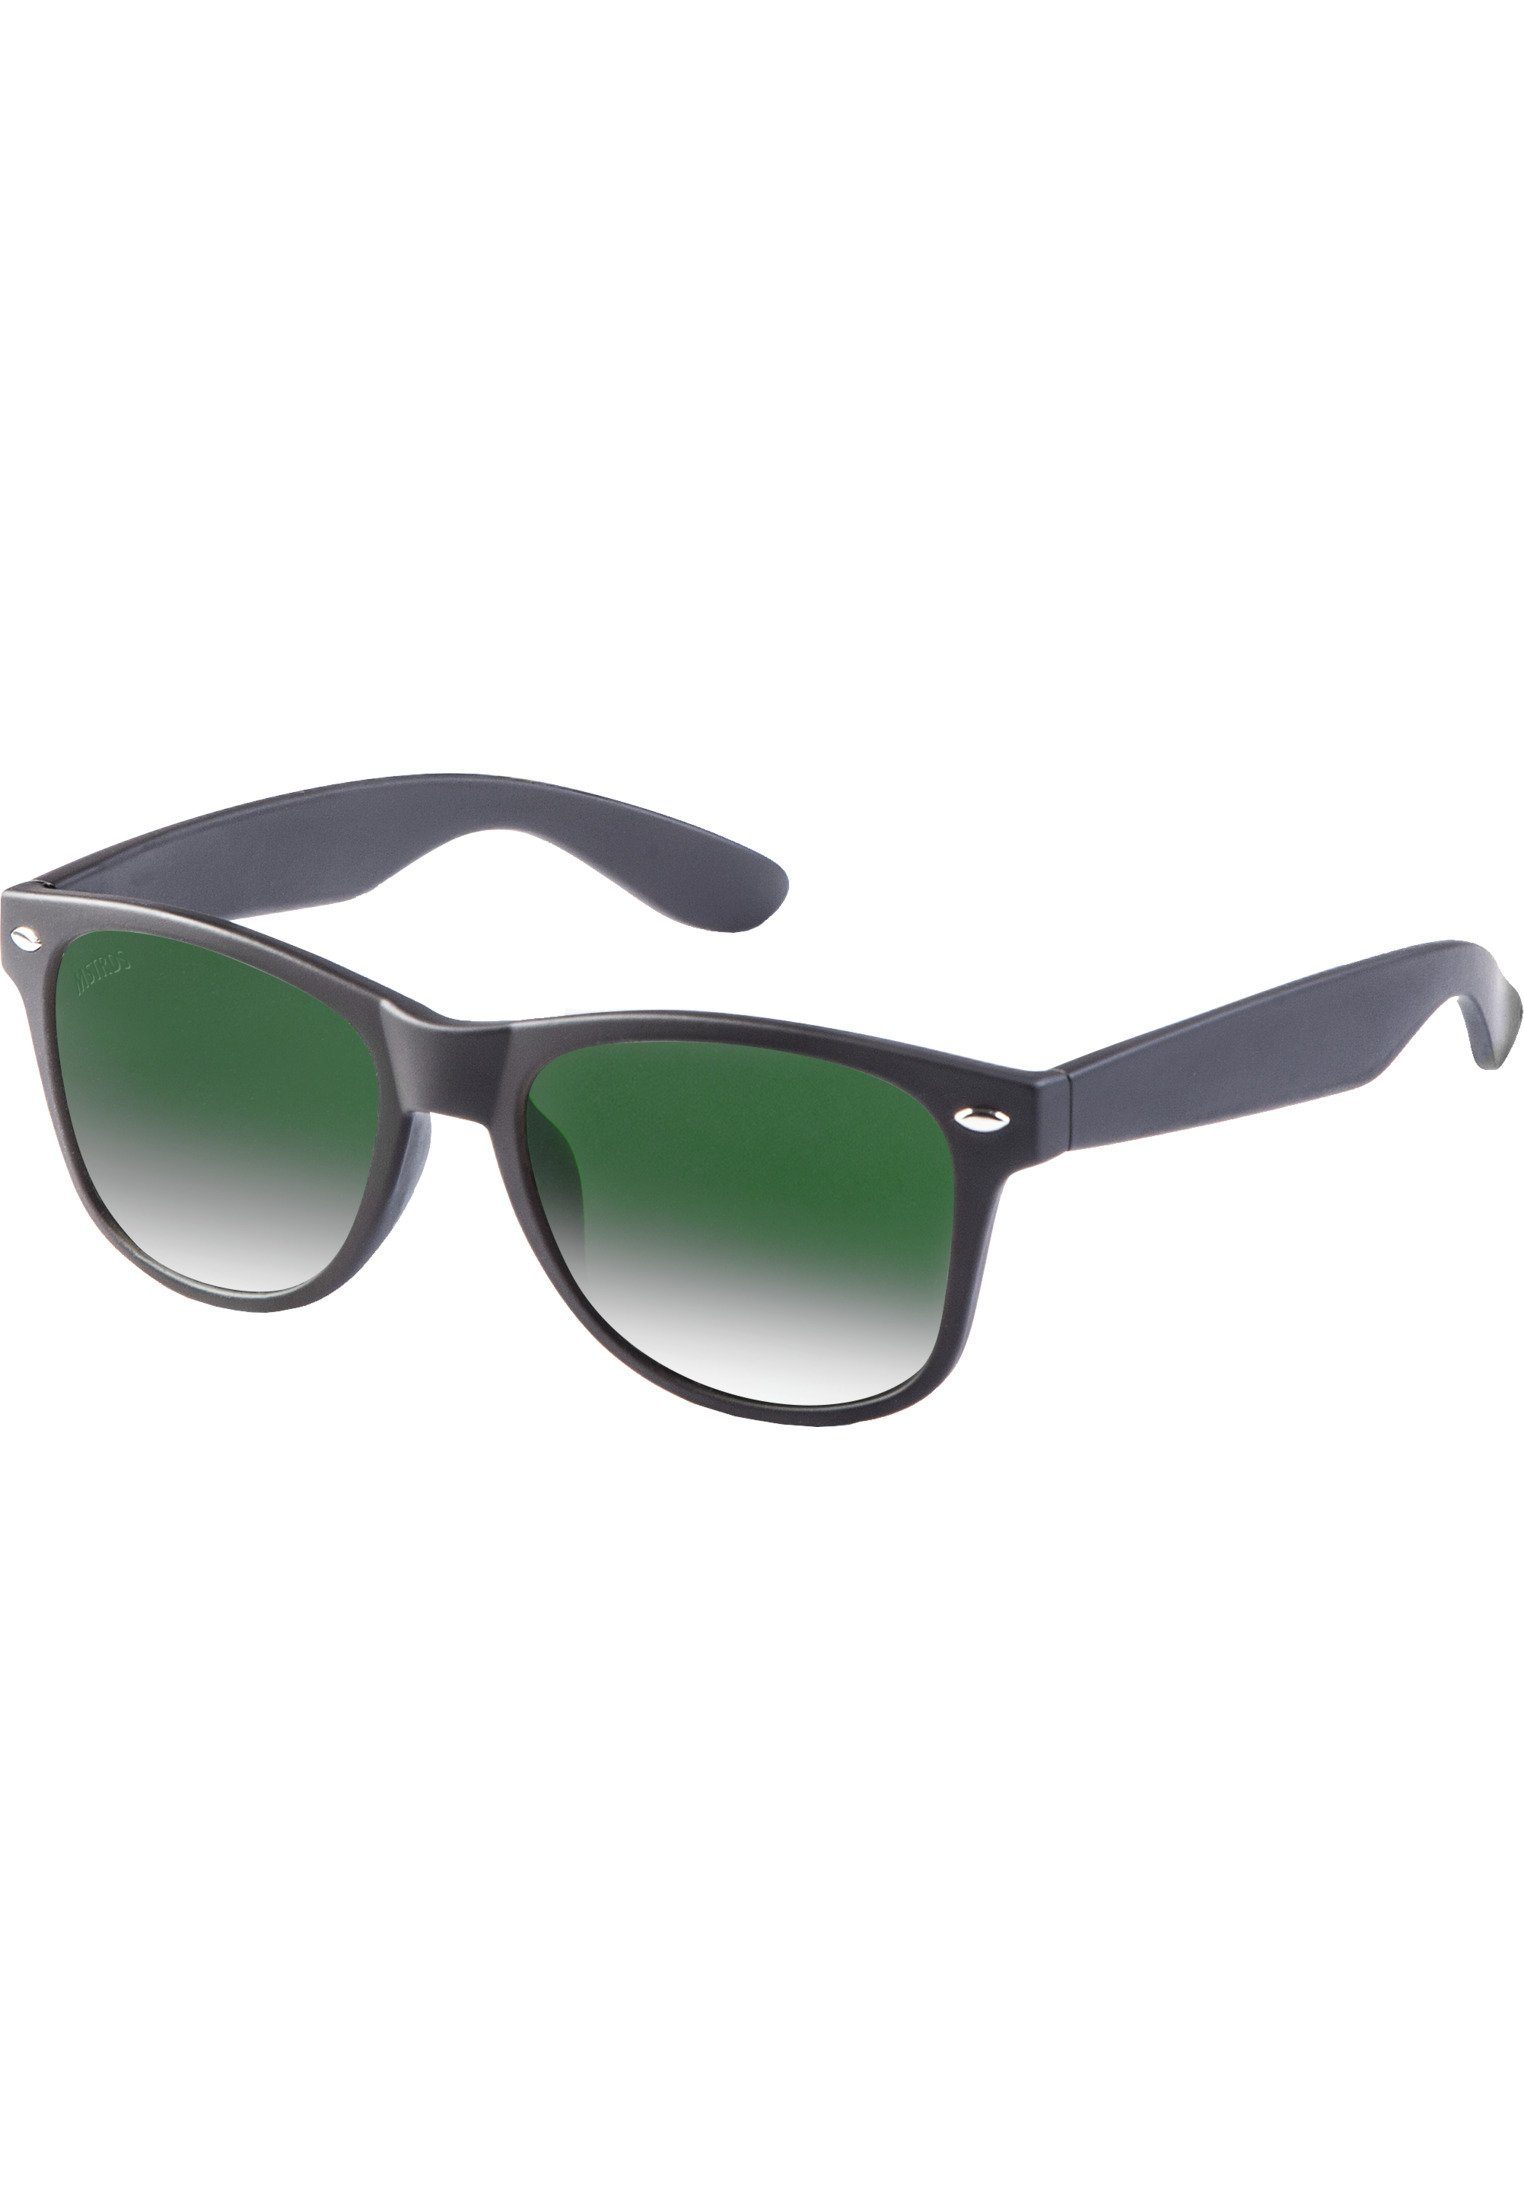 Accessoires Youth Likoma MSTRDS Sonnenbrille blk/grn Sunglasses